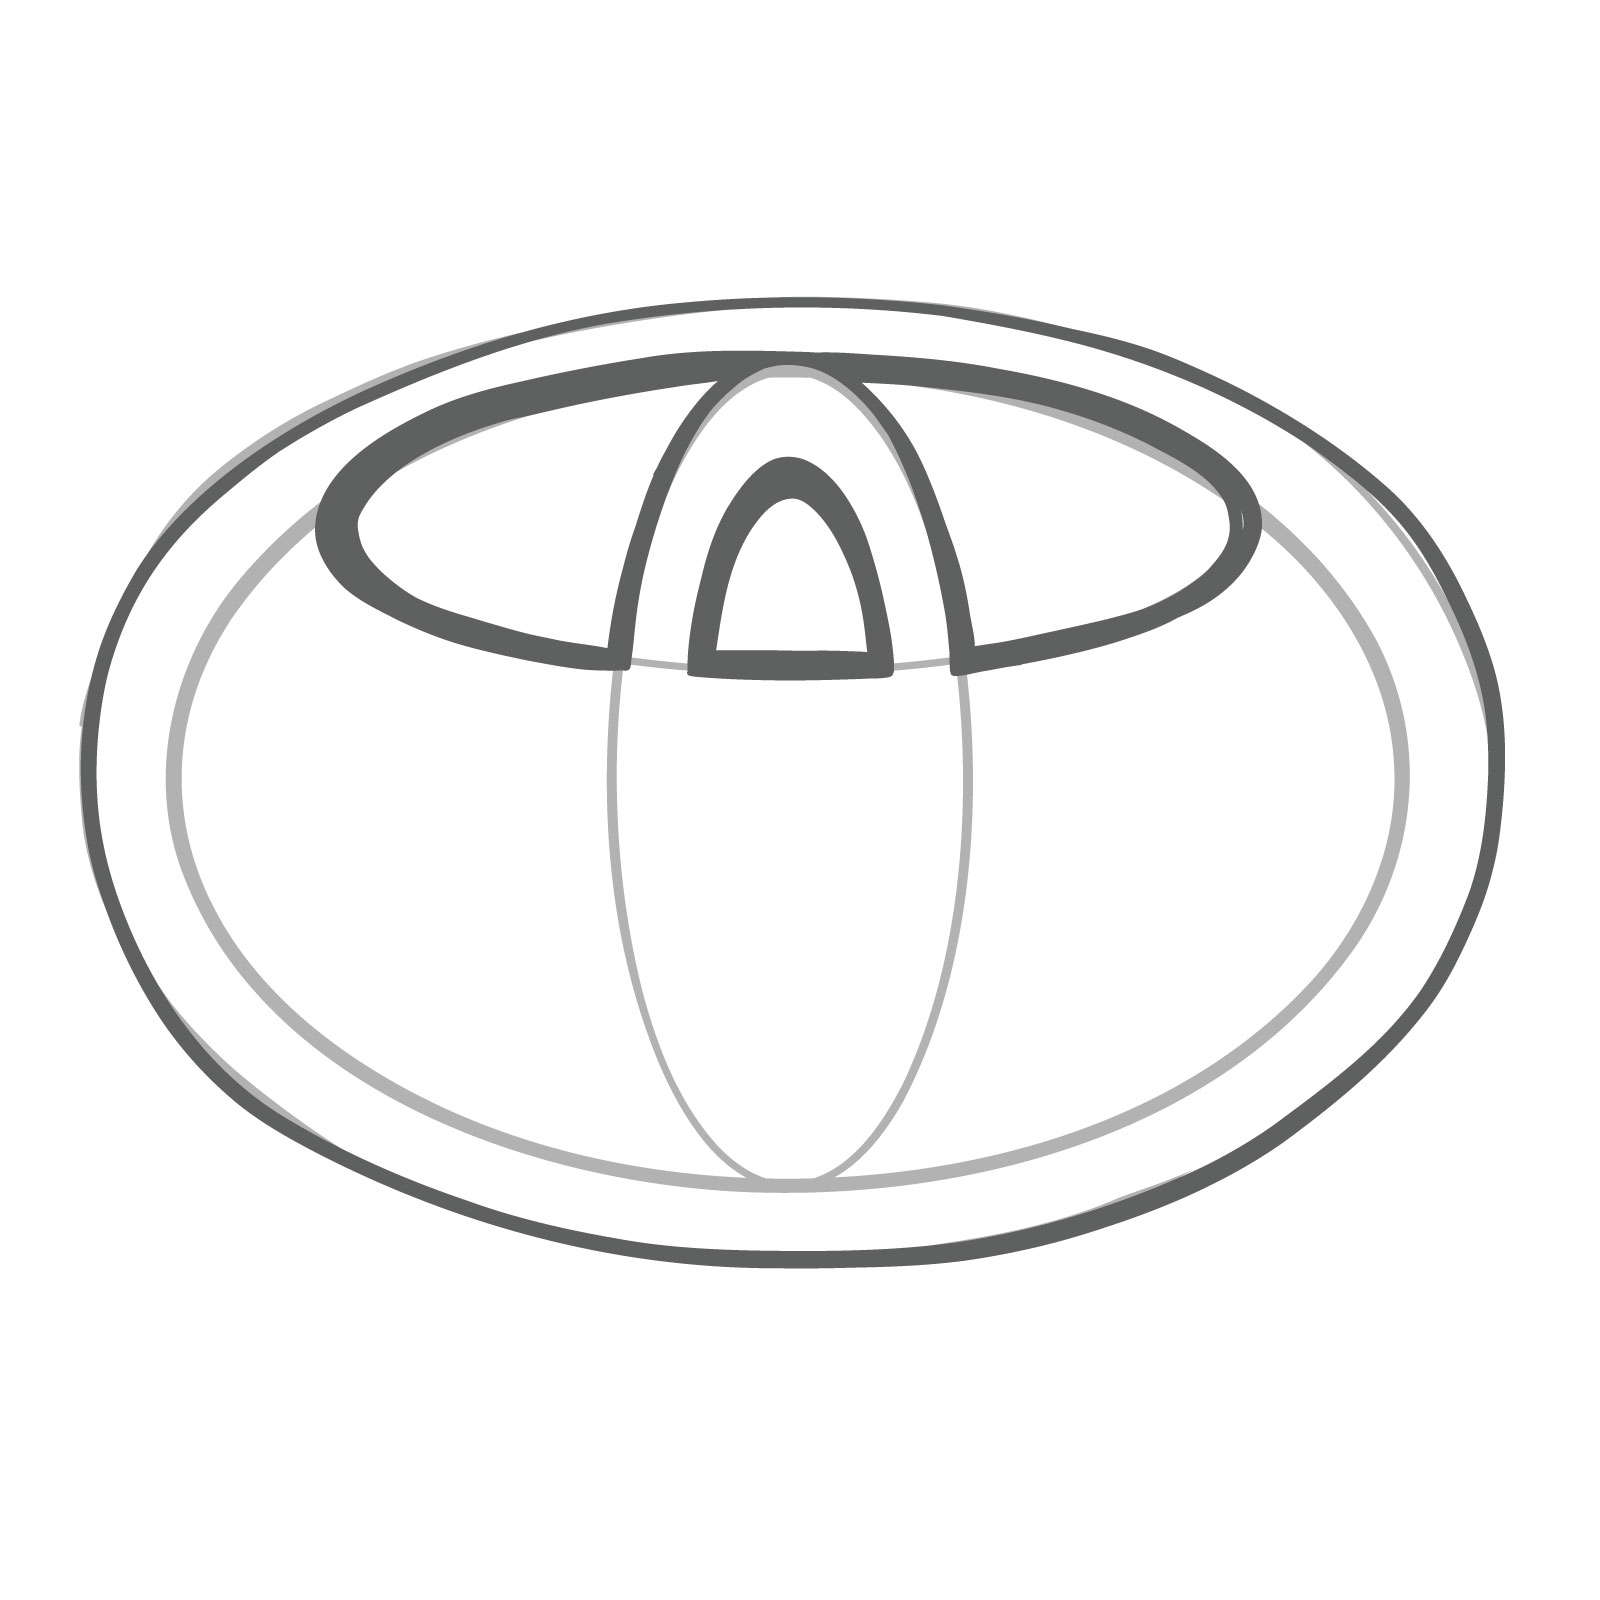 How to draw a Toyota logo - step 07